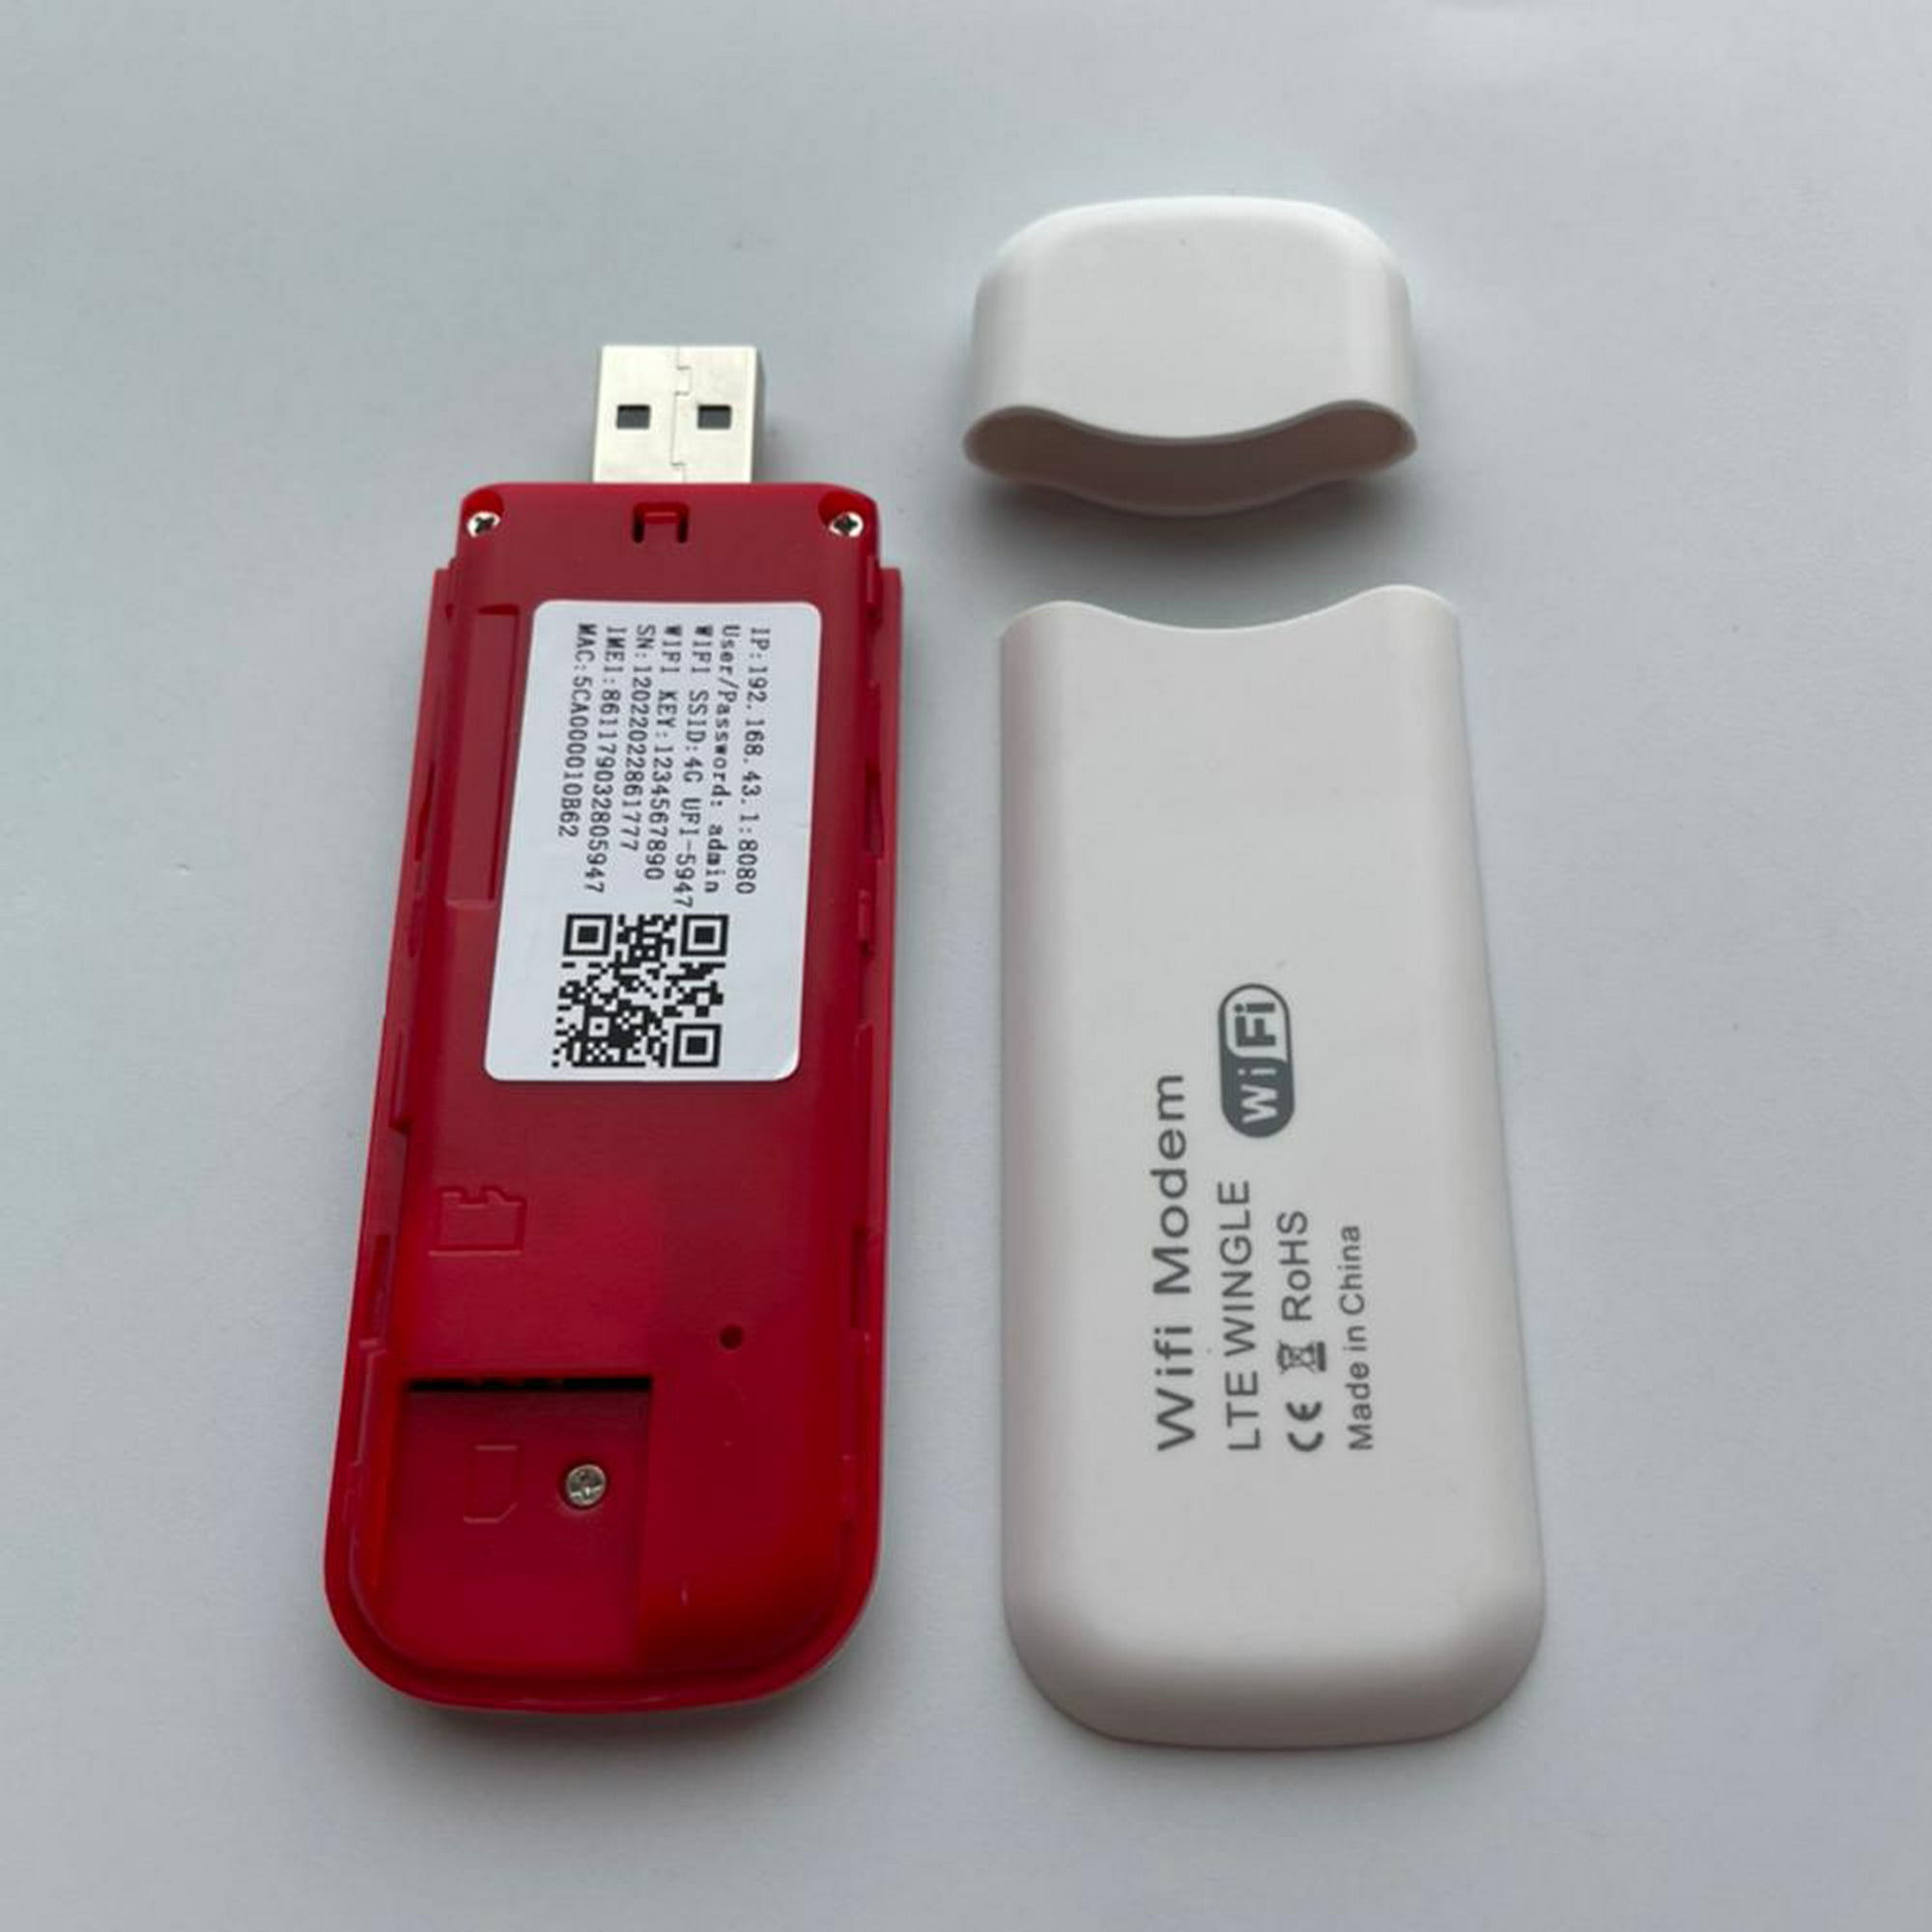 USB Internet Modem 150Mbps Tarjeta SIM de alta velocidad Hotspot